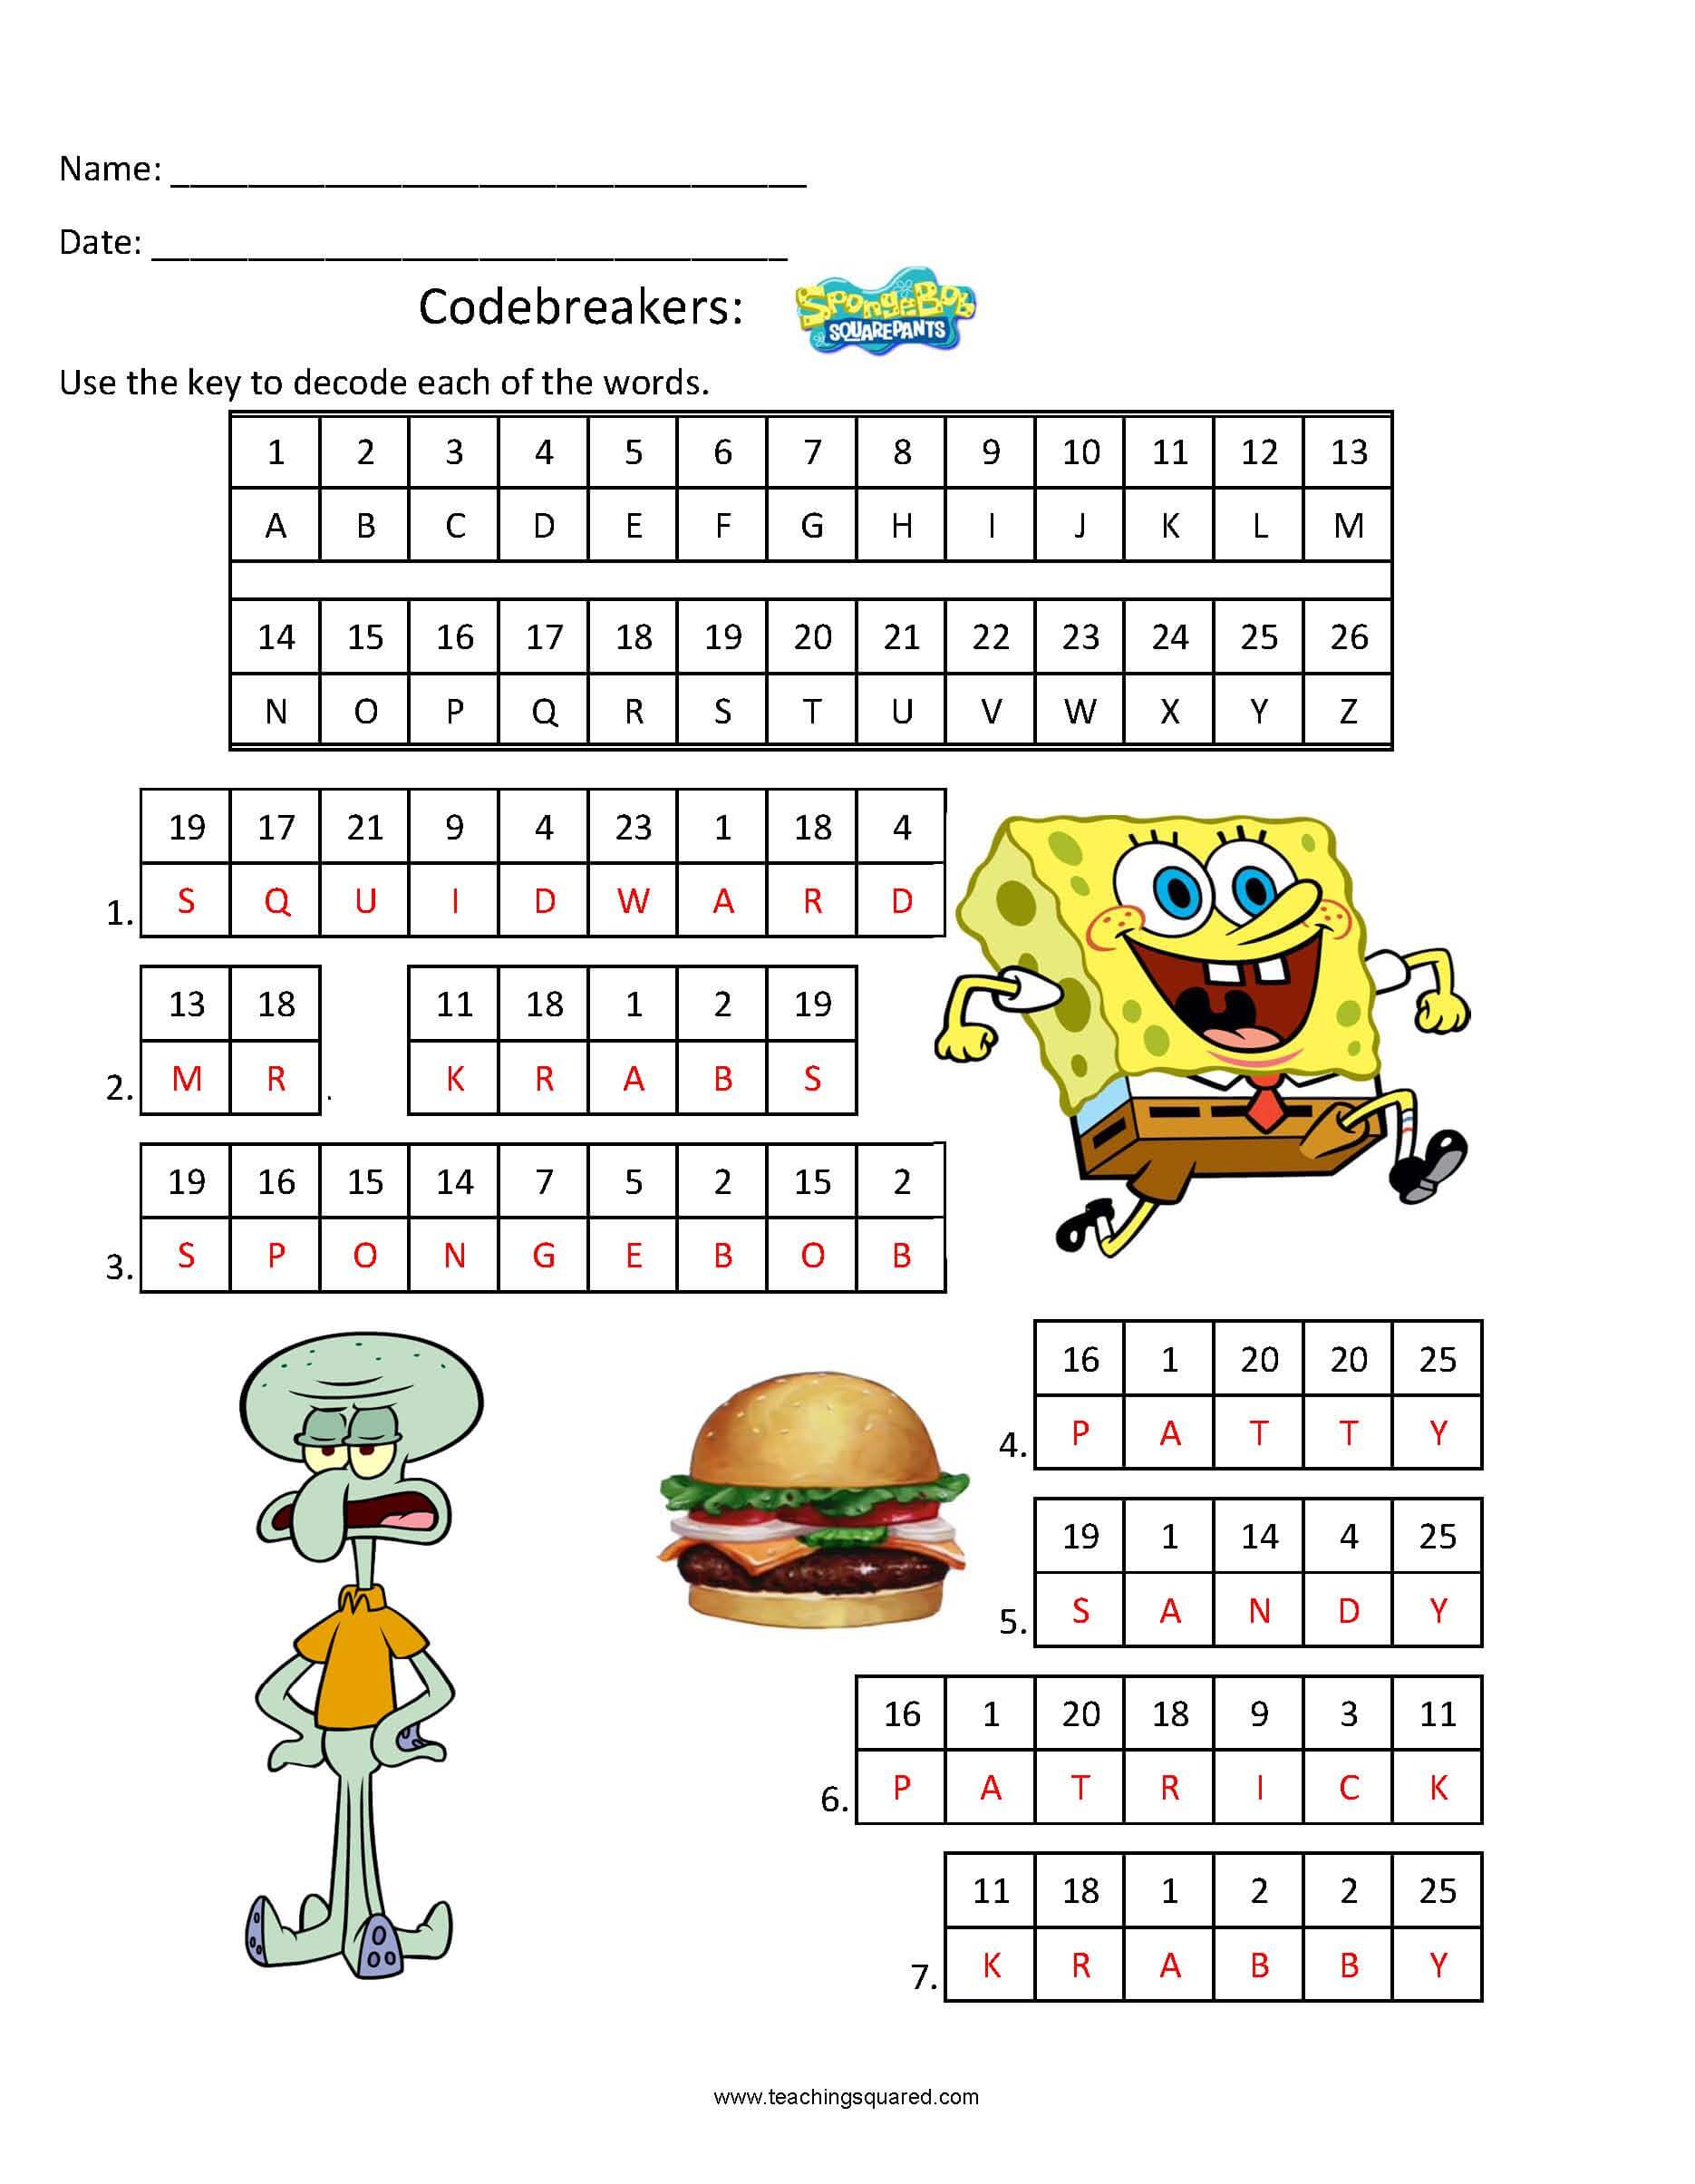 Codebreakers- Spongebob Fun Puzzle for kids